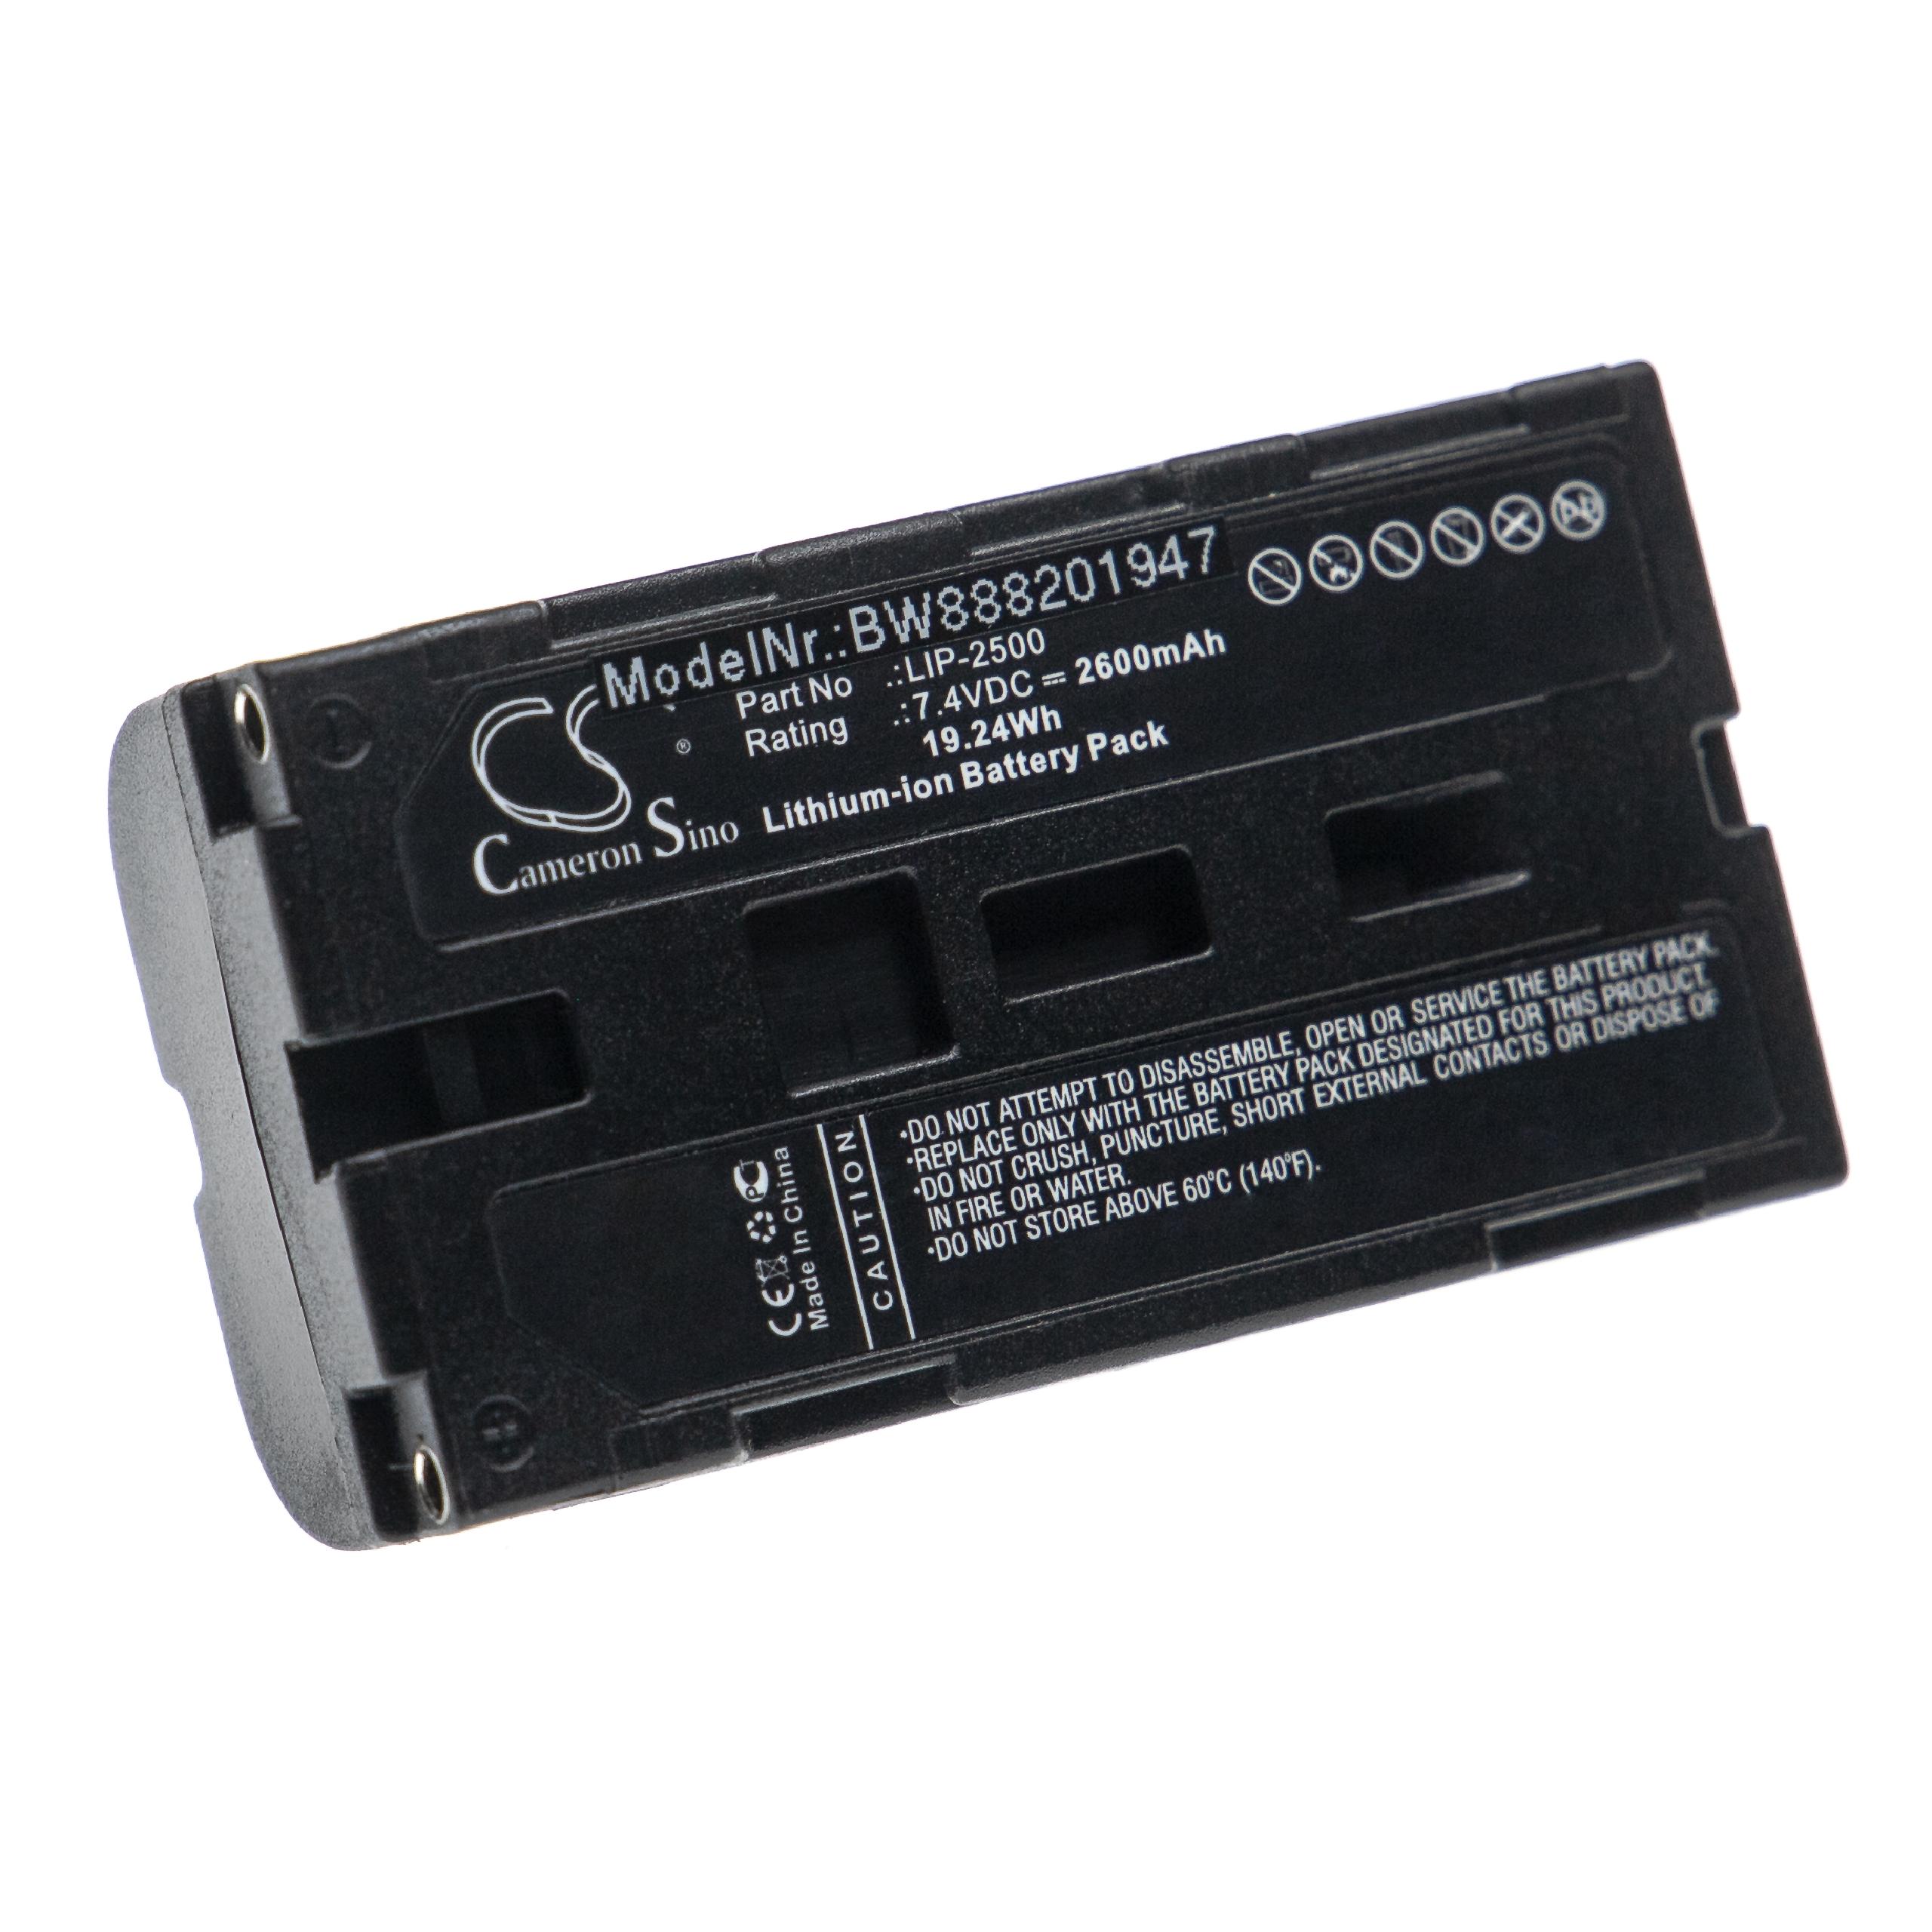 Batería reemplaza Epson C32C831091, LIP-2500, NP-500, NP-500H para impresora Epson - 2600 mAh 7,4 V Li-Ion